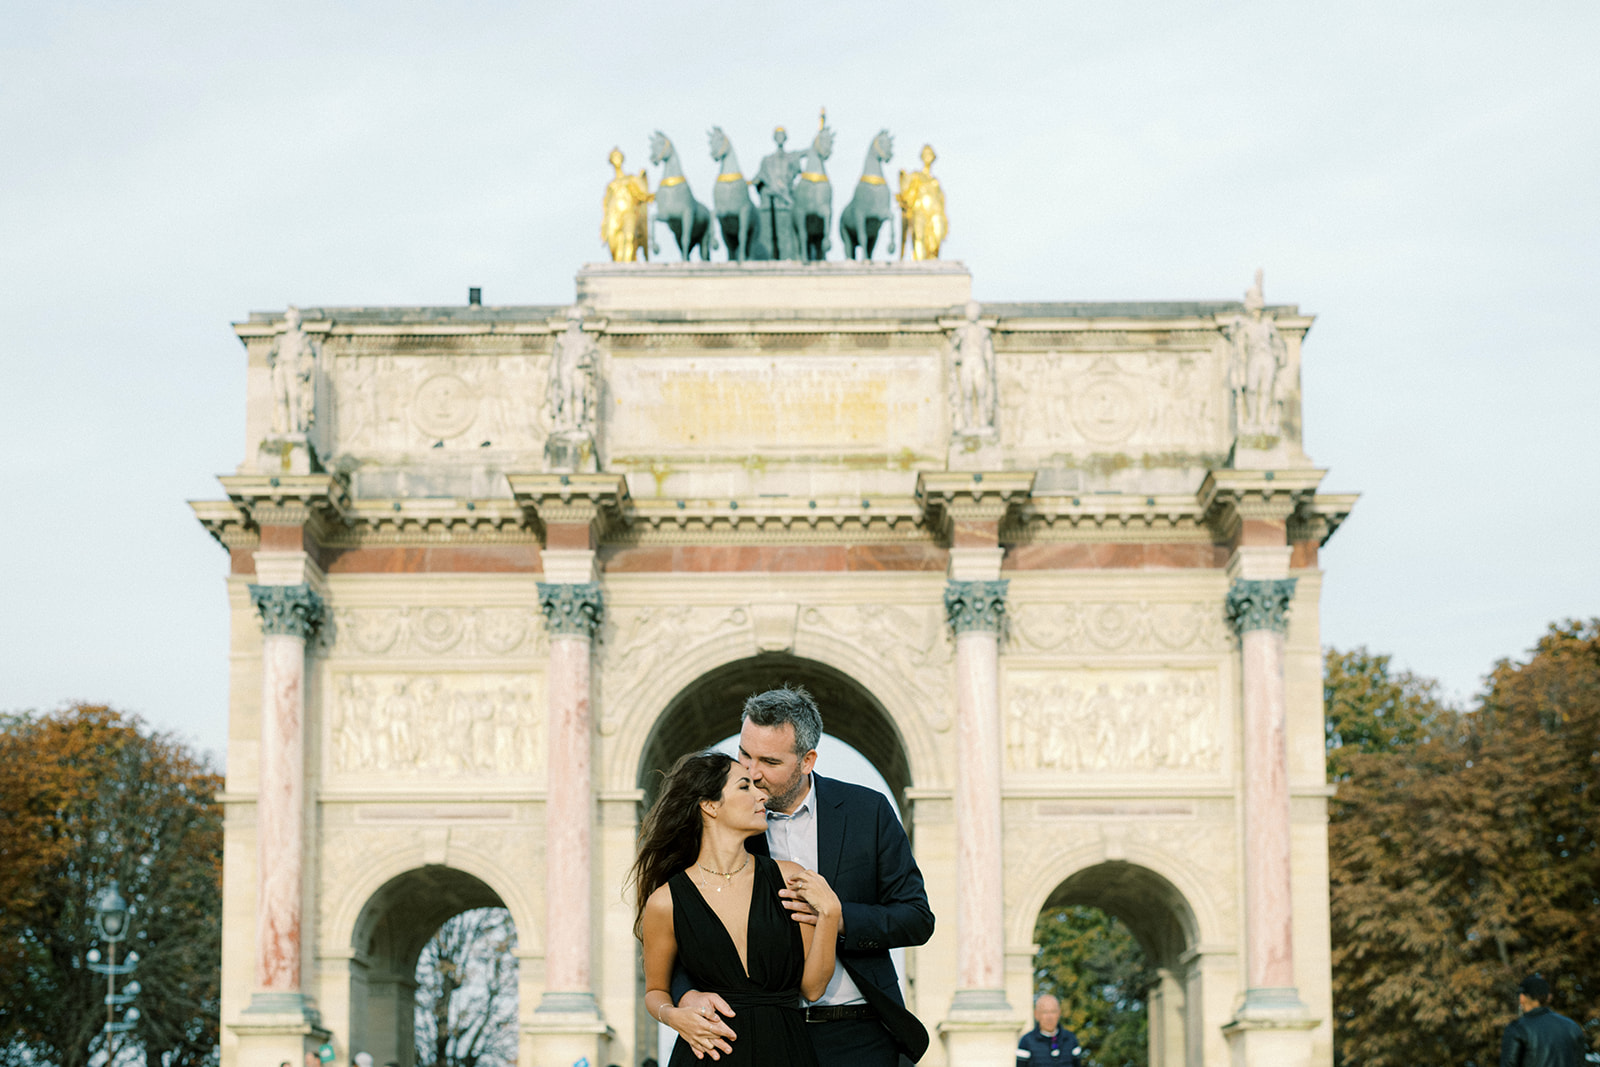 Romantic Engagement at the Louvre in Paris  